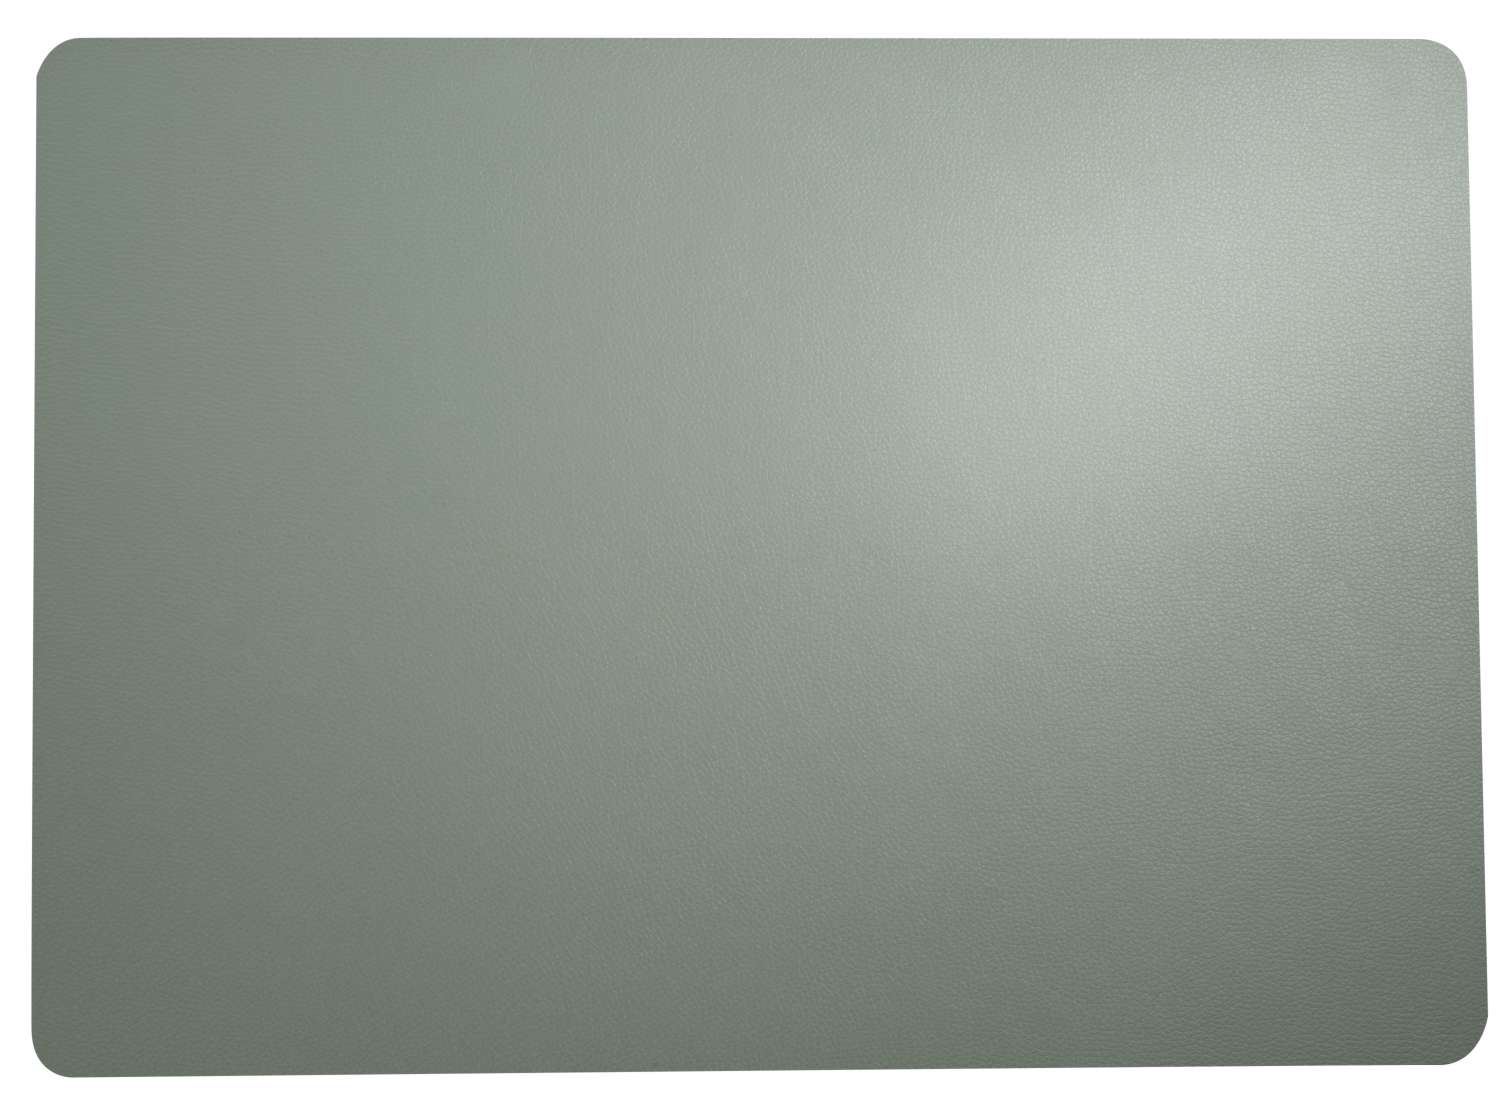  leather optic fine Tischset, mint  Breite: 33cm Länge: 46cm  grün PVC - Lederoptik